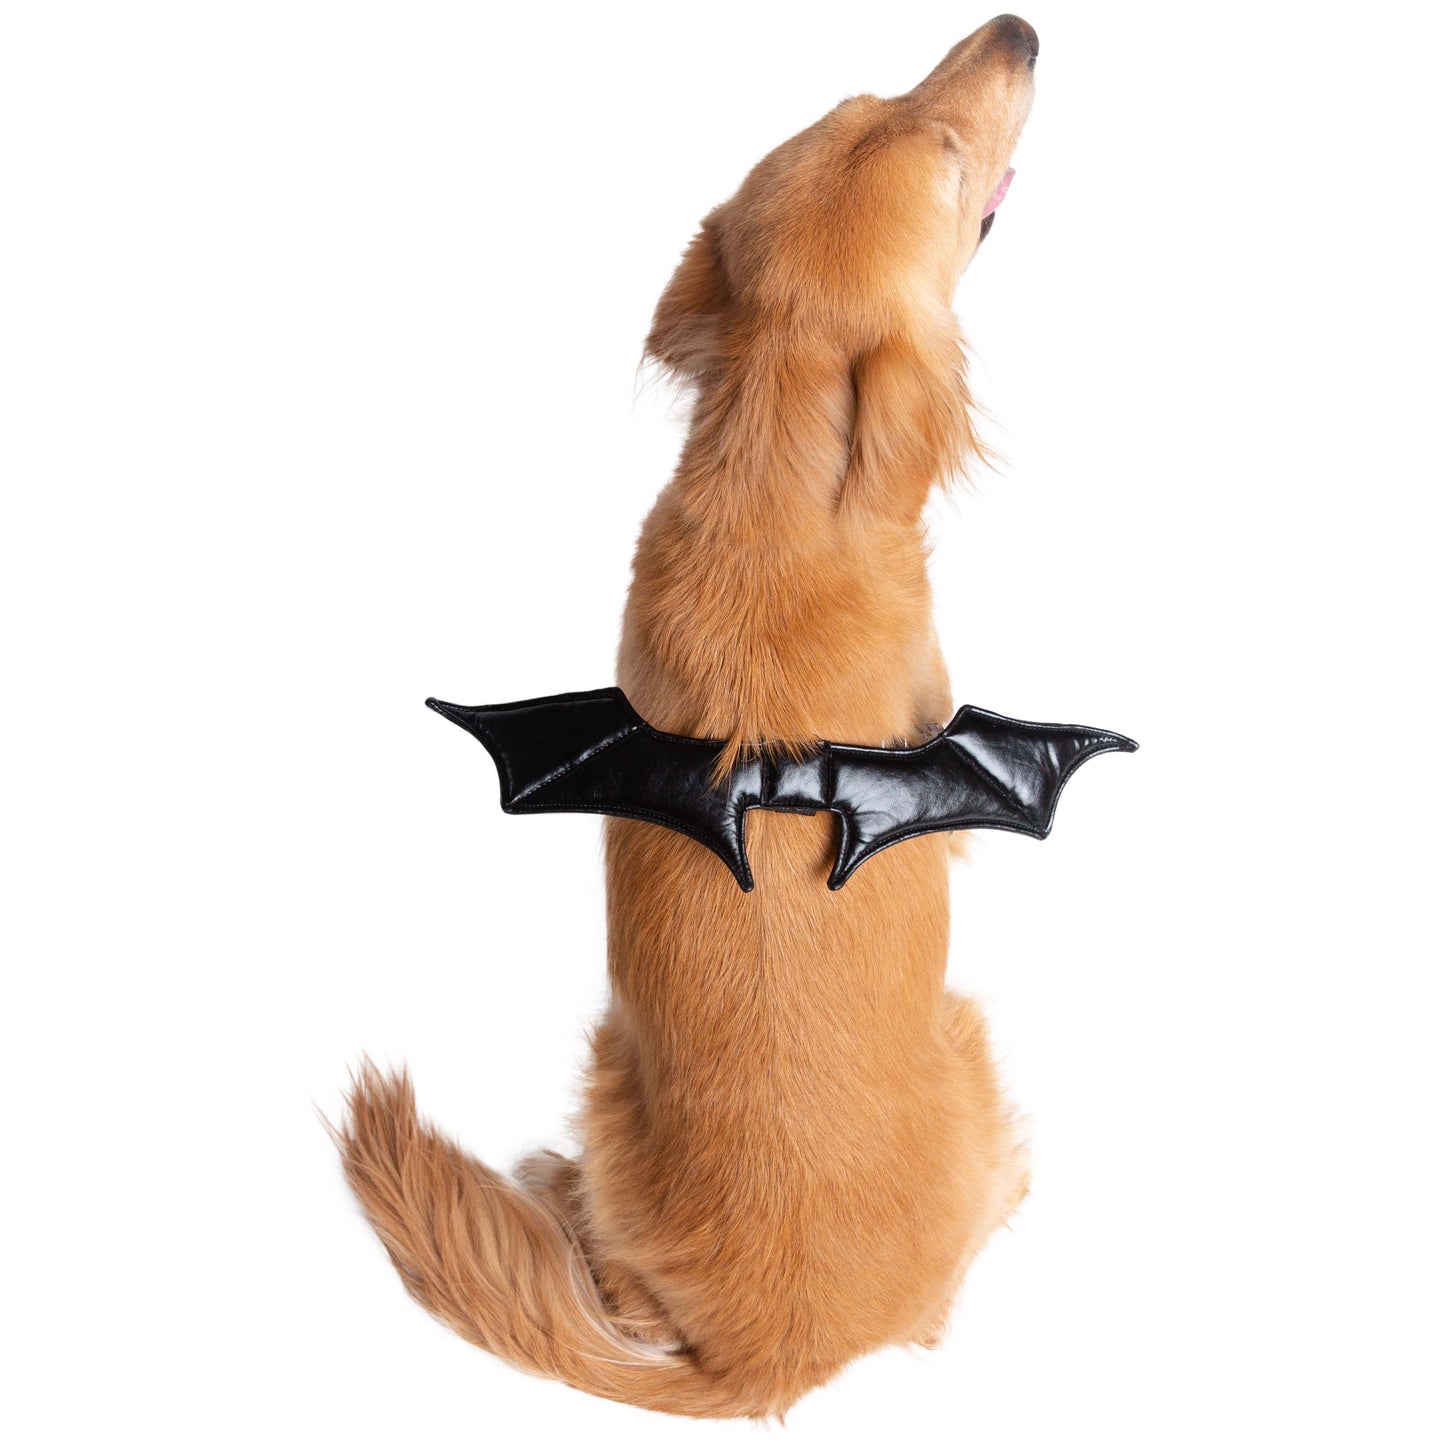 BAT HARNESS ATTACHMENT COSTUME FOR DOGS